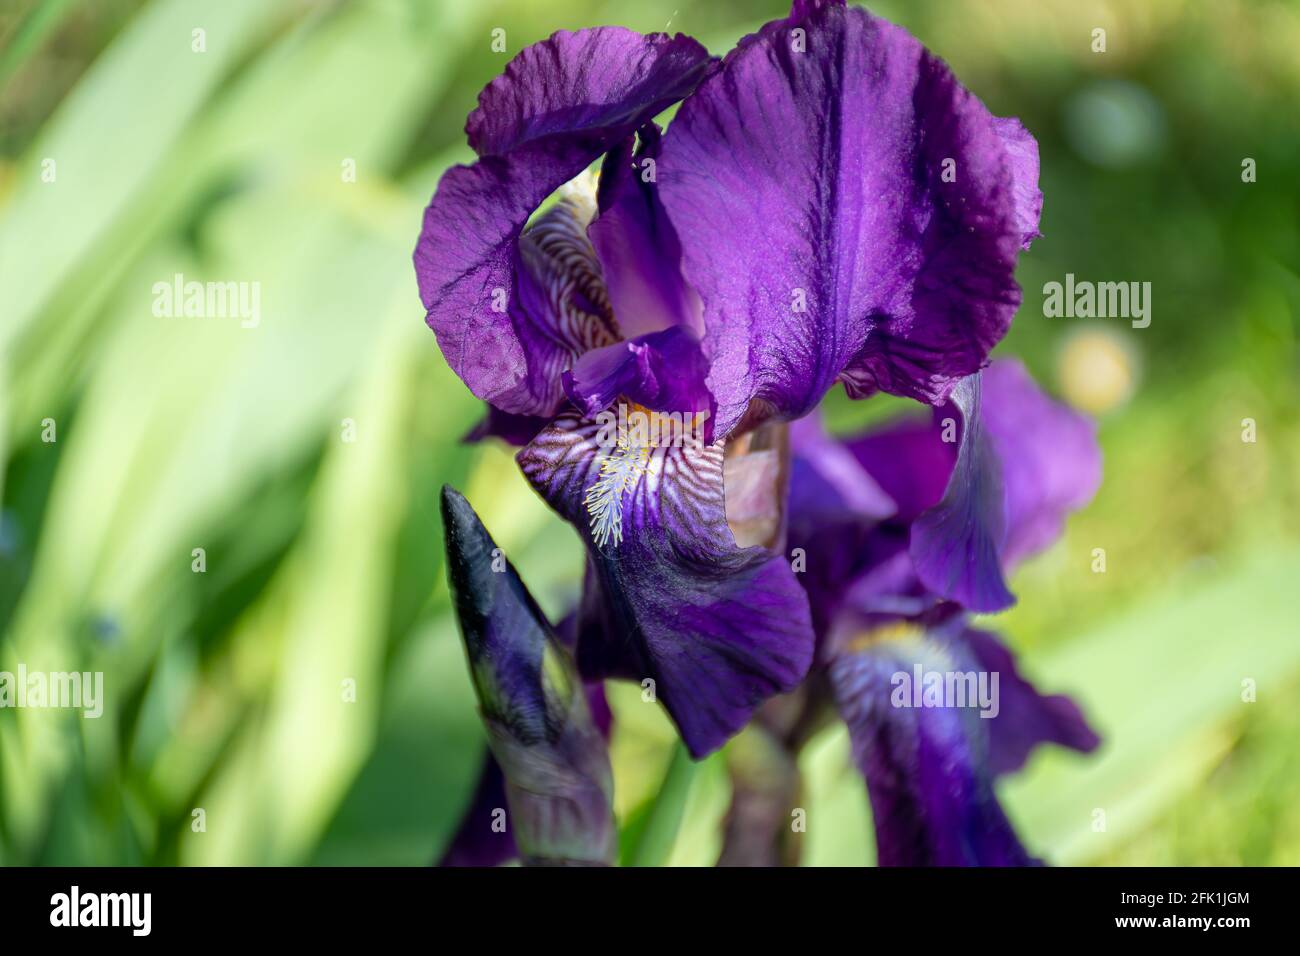 Violet Iris in a green garden in europe Stock Photo